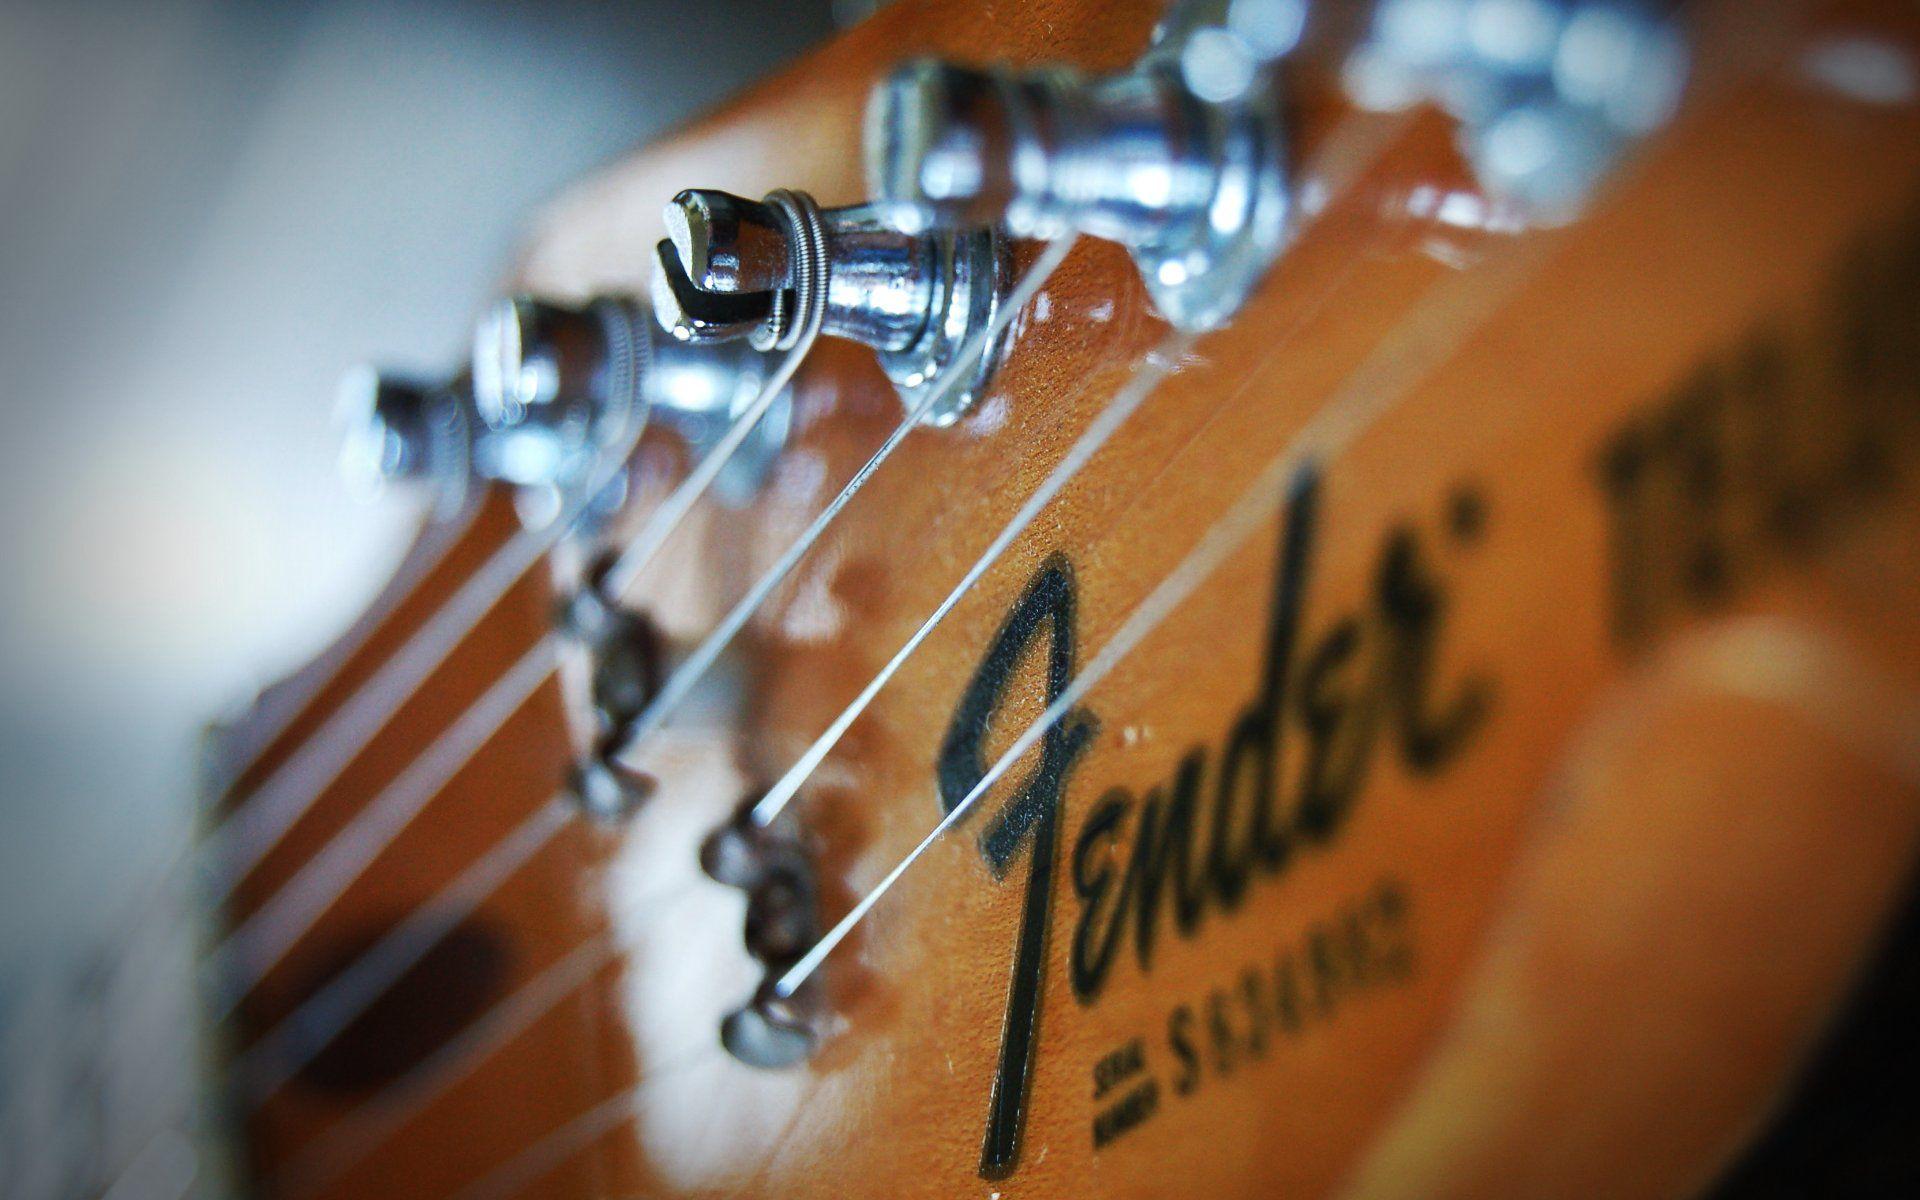 Fender Acoustic Guitar Wallpaper